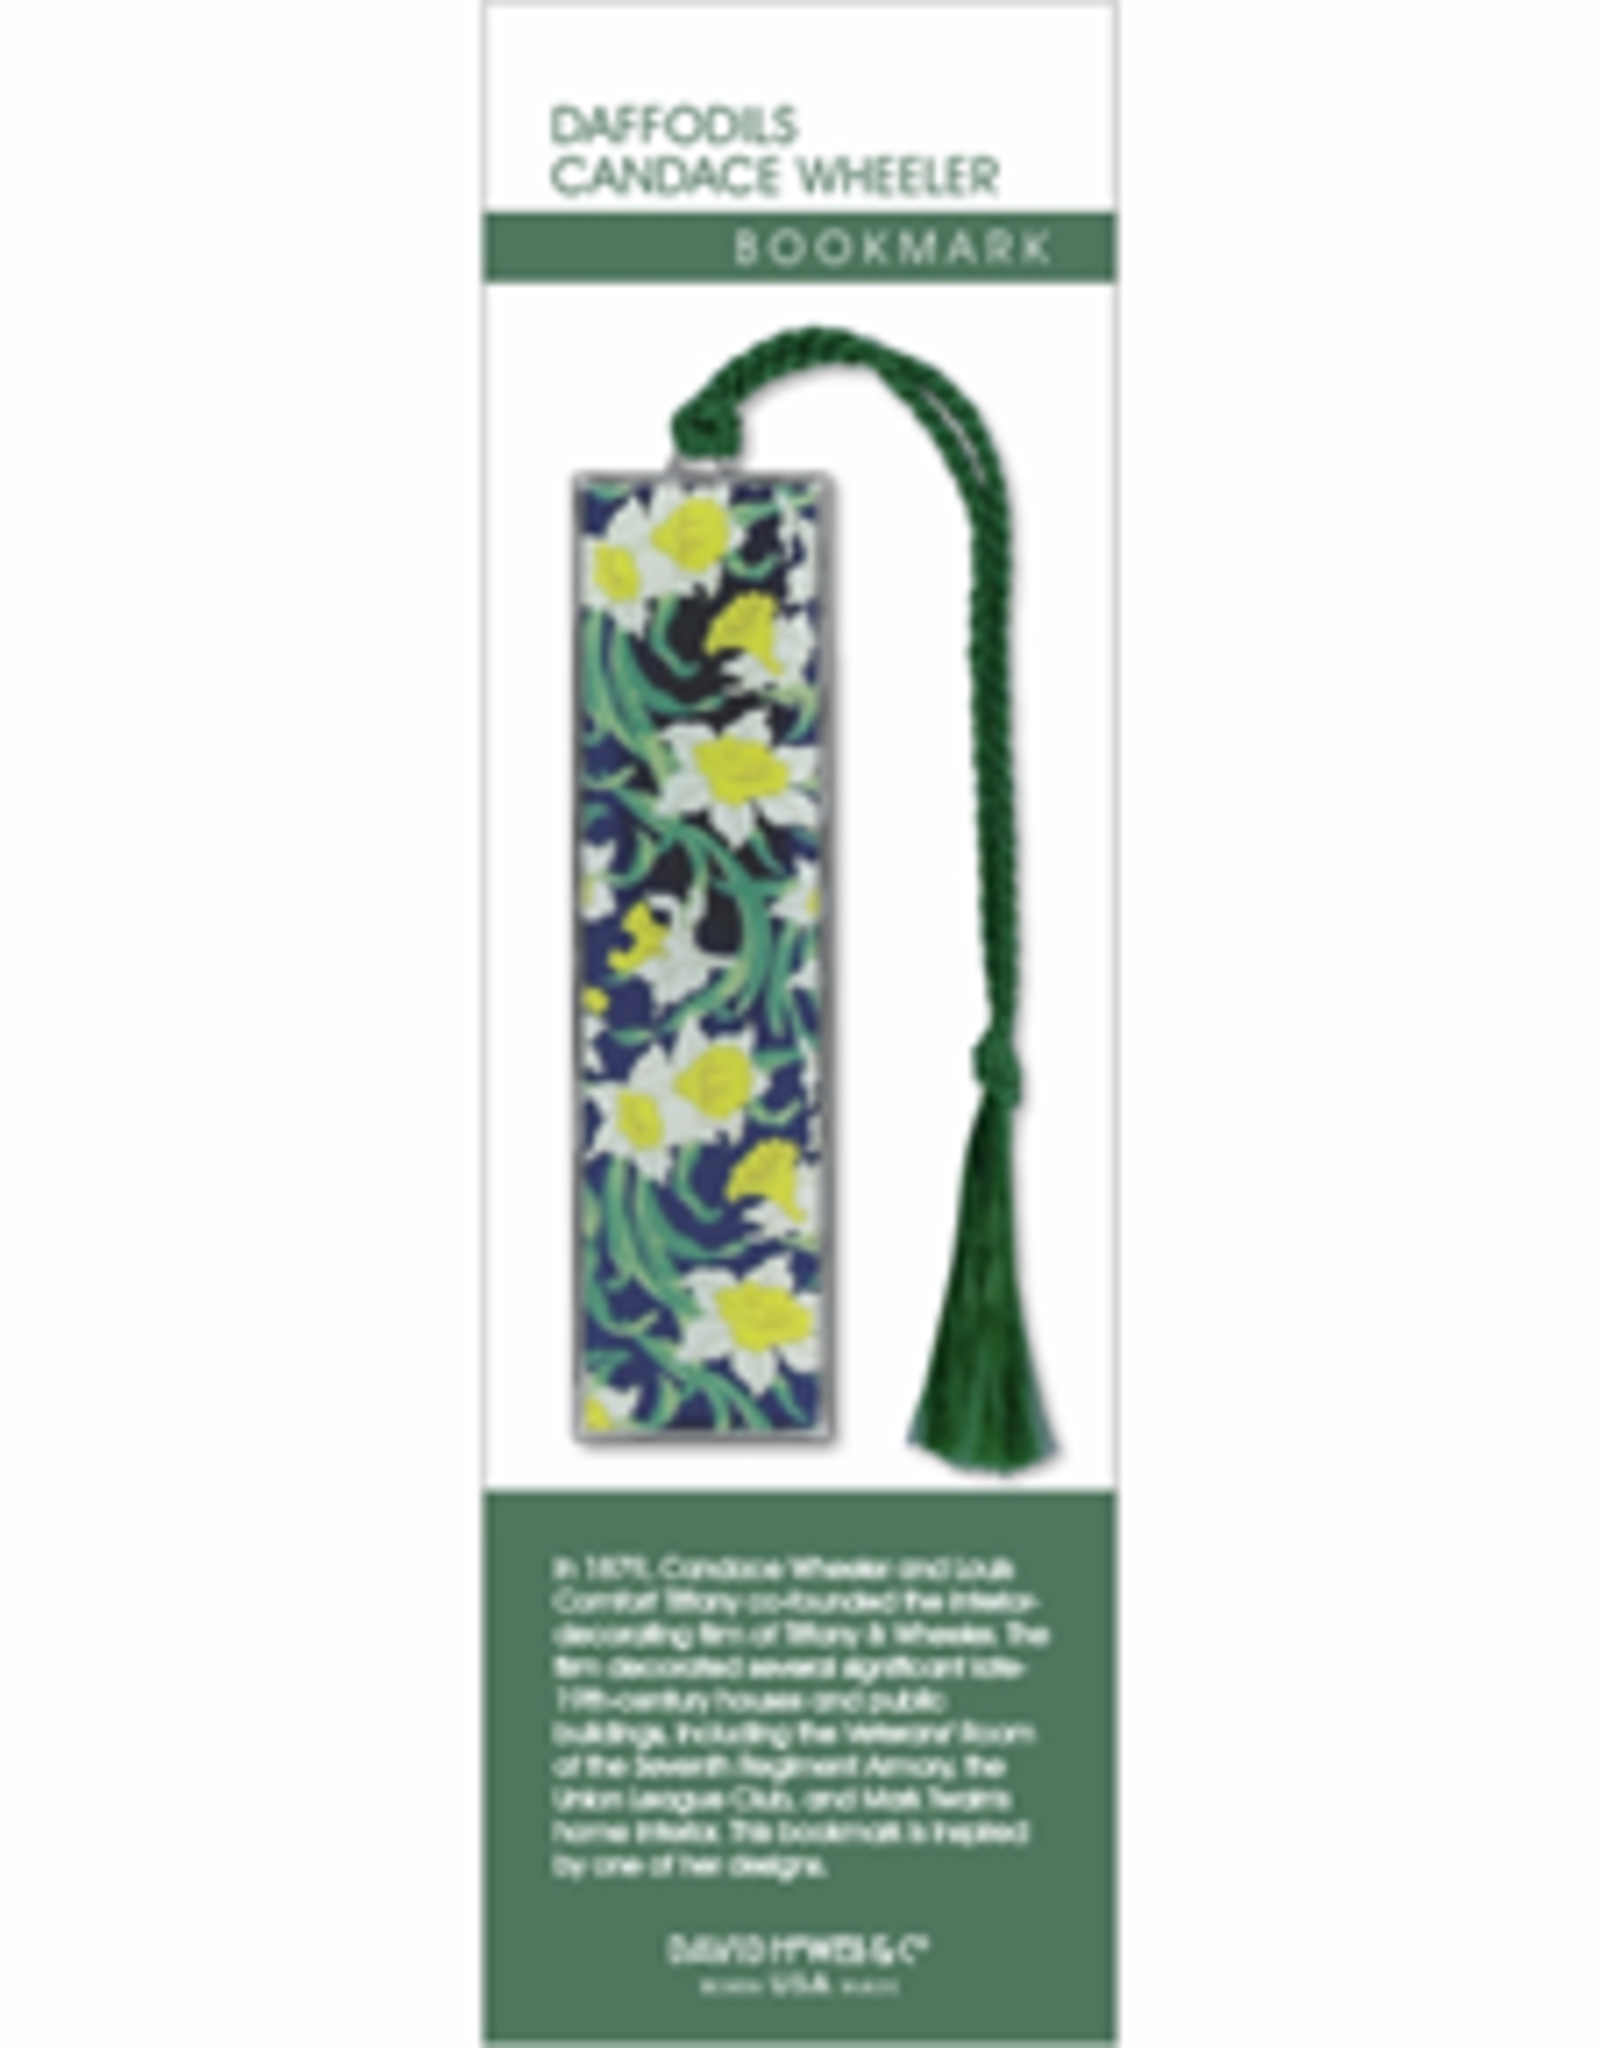 David Howell & Company Daffodils Candace Wheeler Bookmark